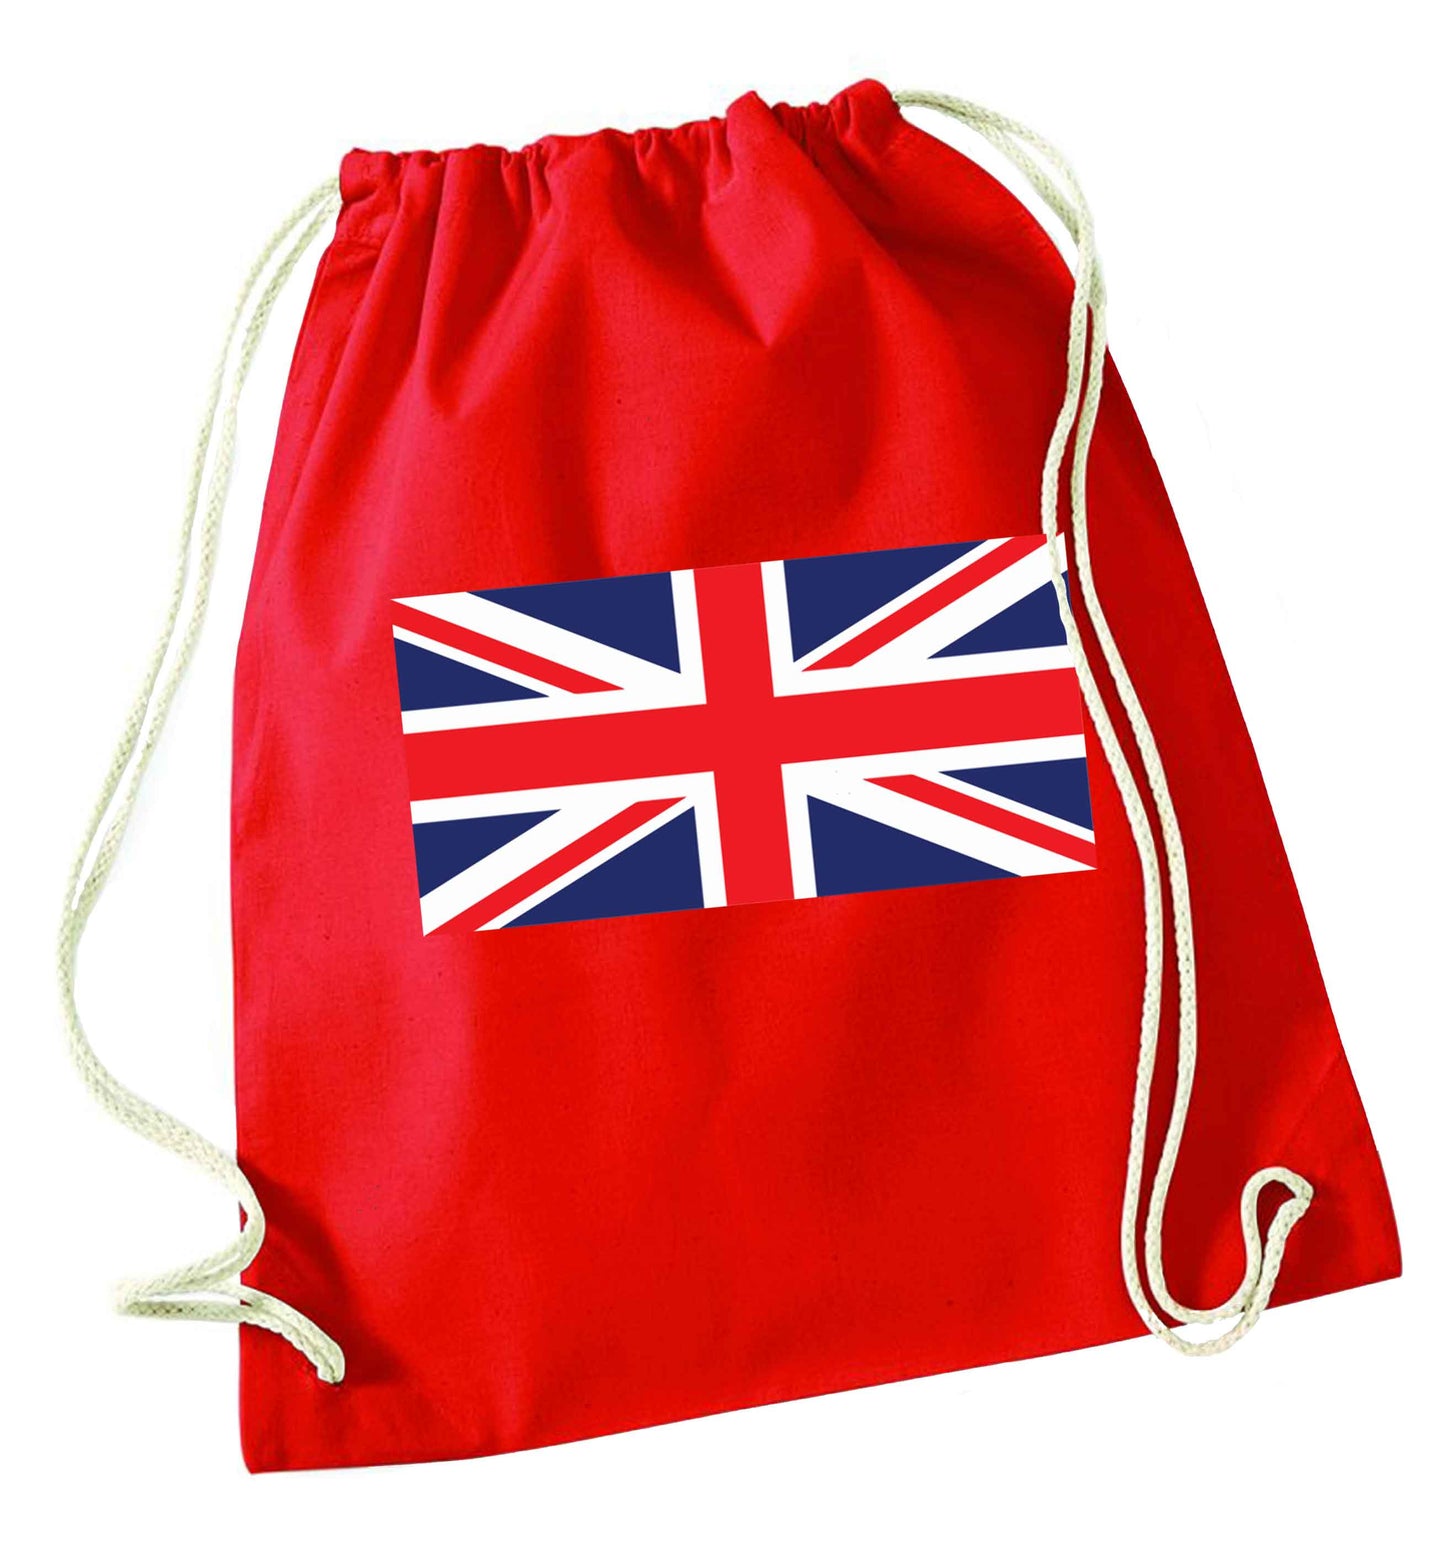 Union Jack red drawstring bag 